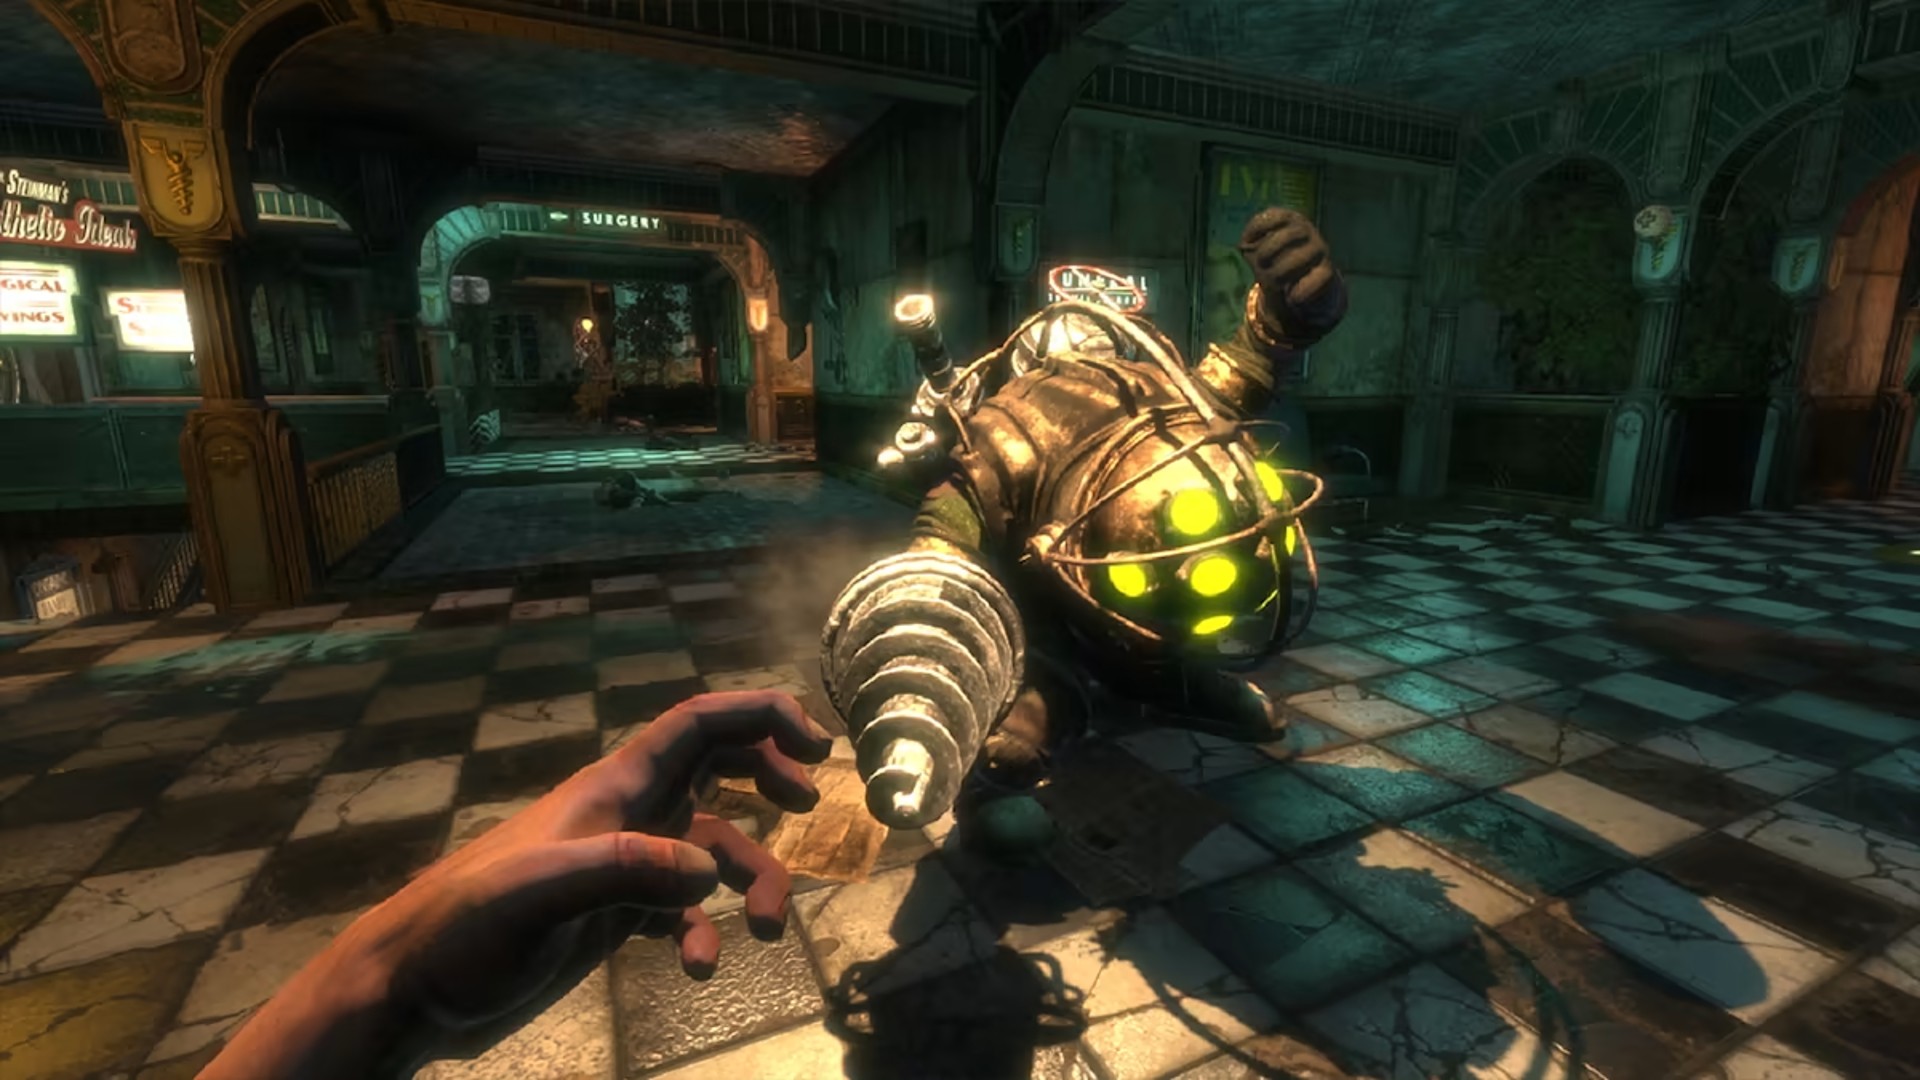 BioShock เกมที่หลายคนชื่นชอบ ตอนนี้มีอายุครบ 15 ปีแล้ว